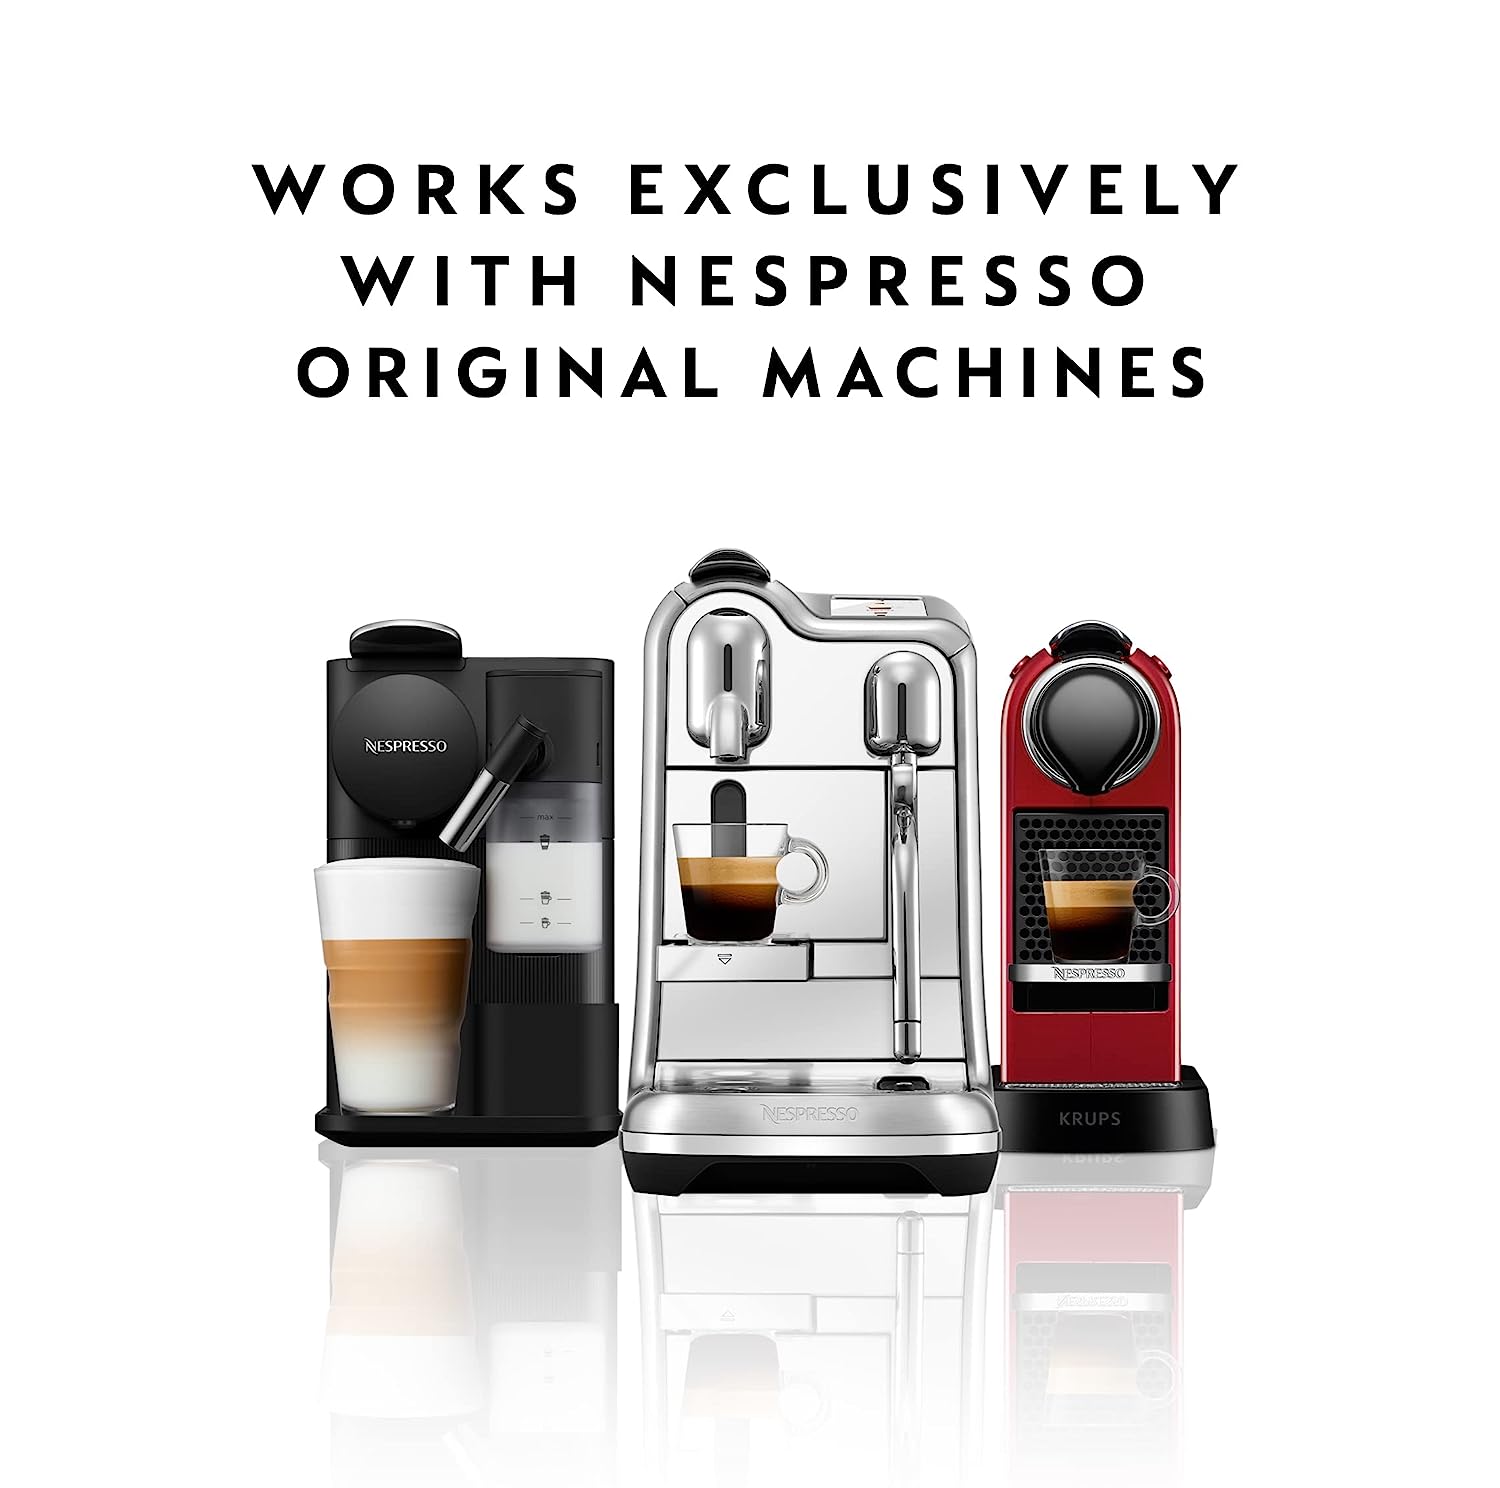 Nespresso Capsules OriginalLine, Morning Lungo Blends Variety Pack, Mild, Medium, and Dark Roast Coffee, 50 Count Espresso Coffee Pods, Brews 3.7 Ounce (ORIGINALLINE ONLY)